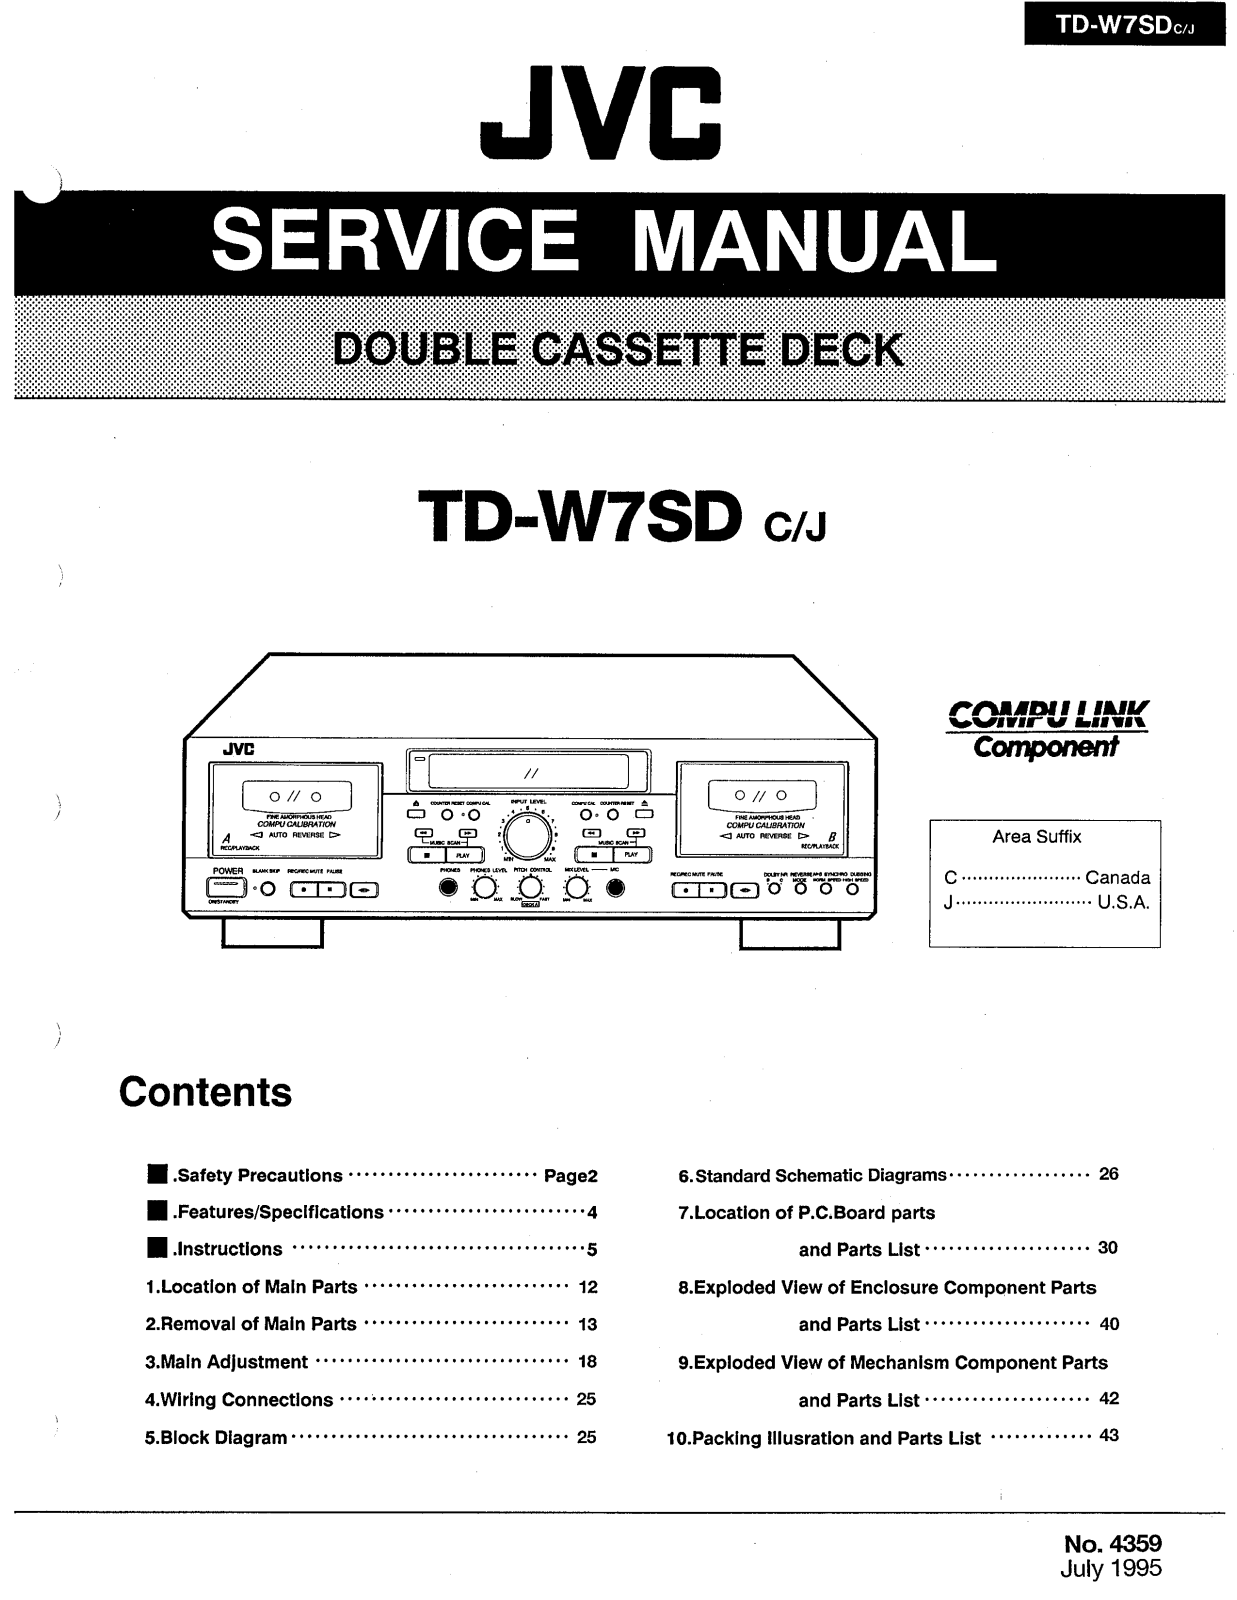 Jvc TD-W7-SD Service Manual